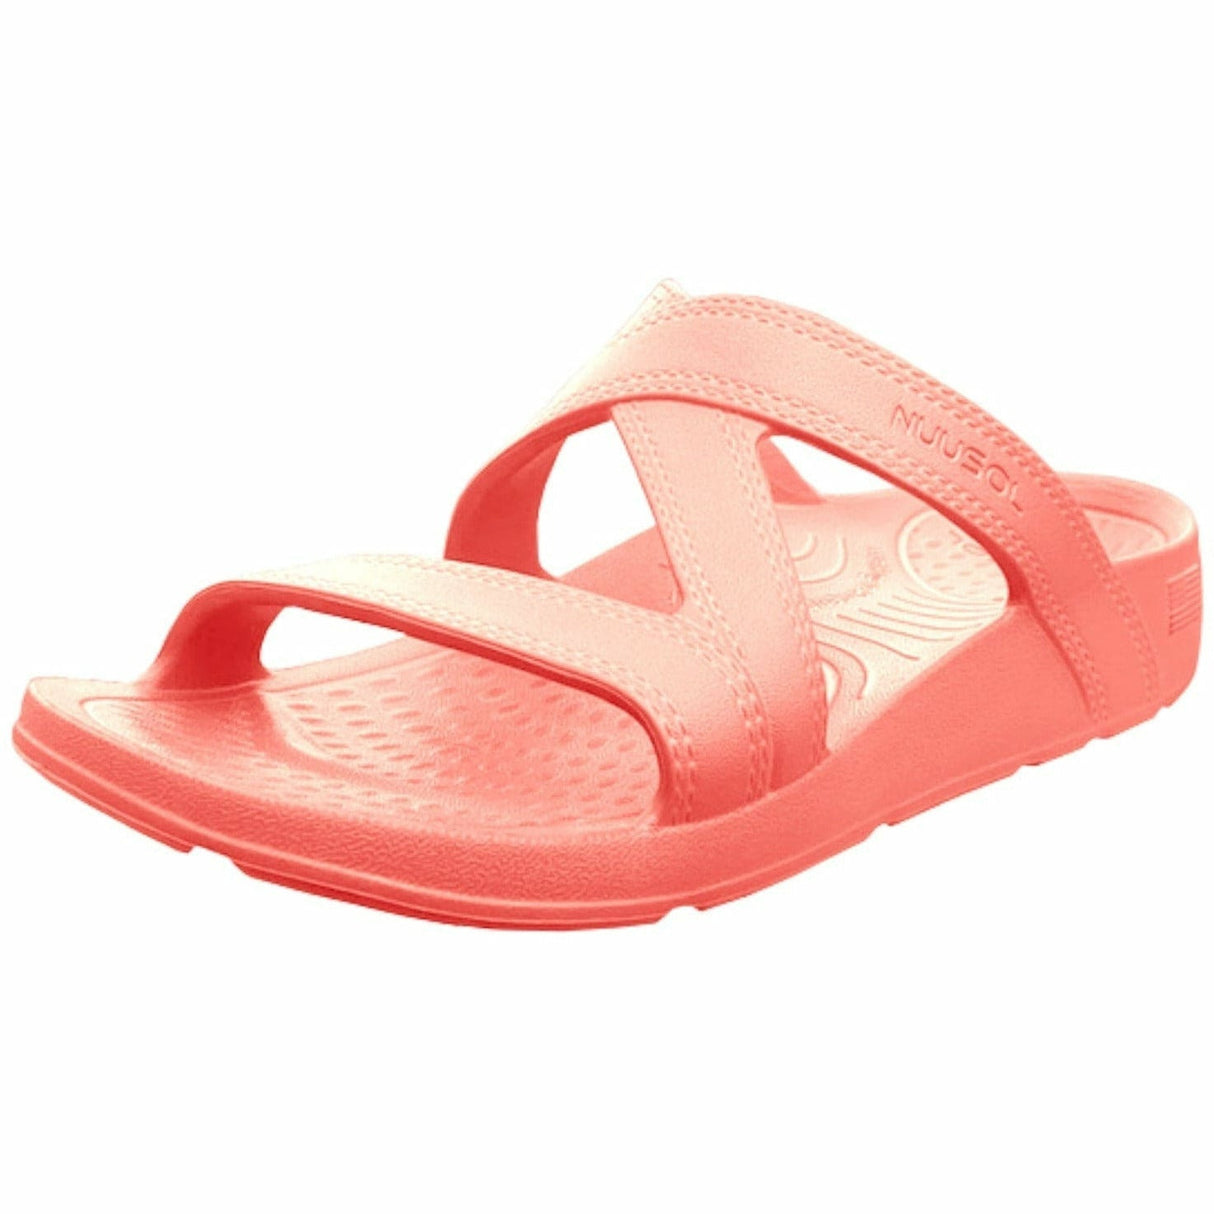 NuuSol Womens Hailey Slide Sandals  -  W6 / Coral Sunrise